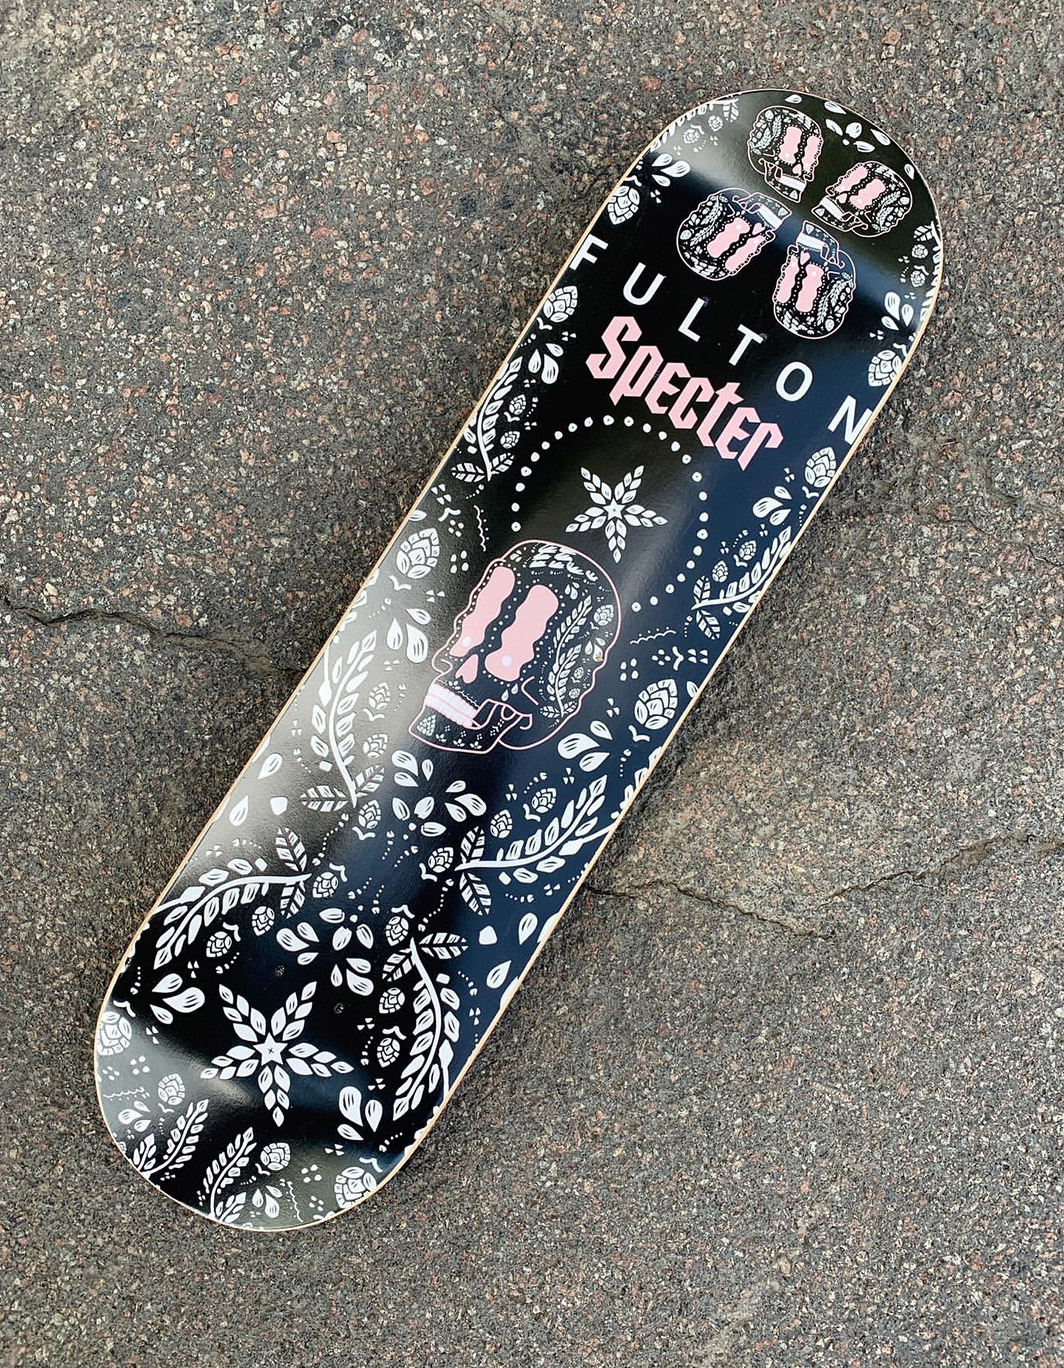 FUL_skateboard